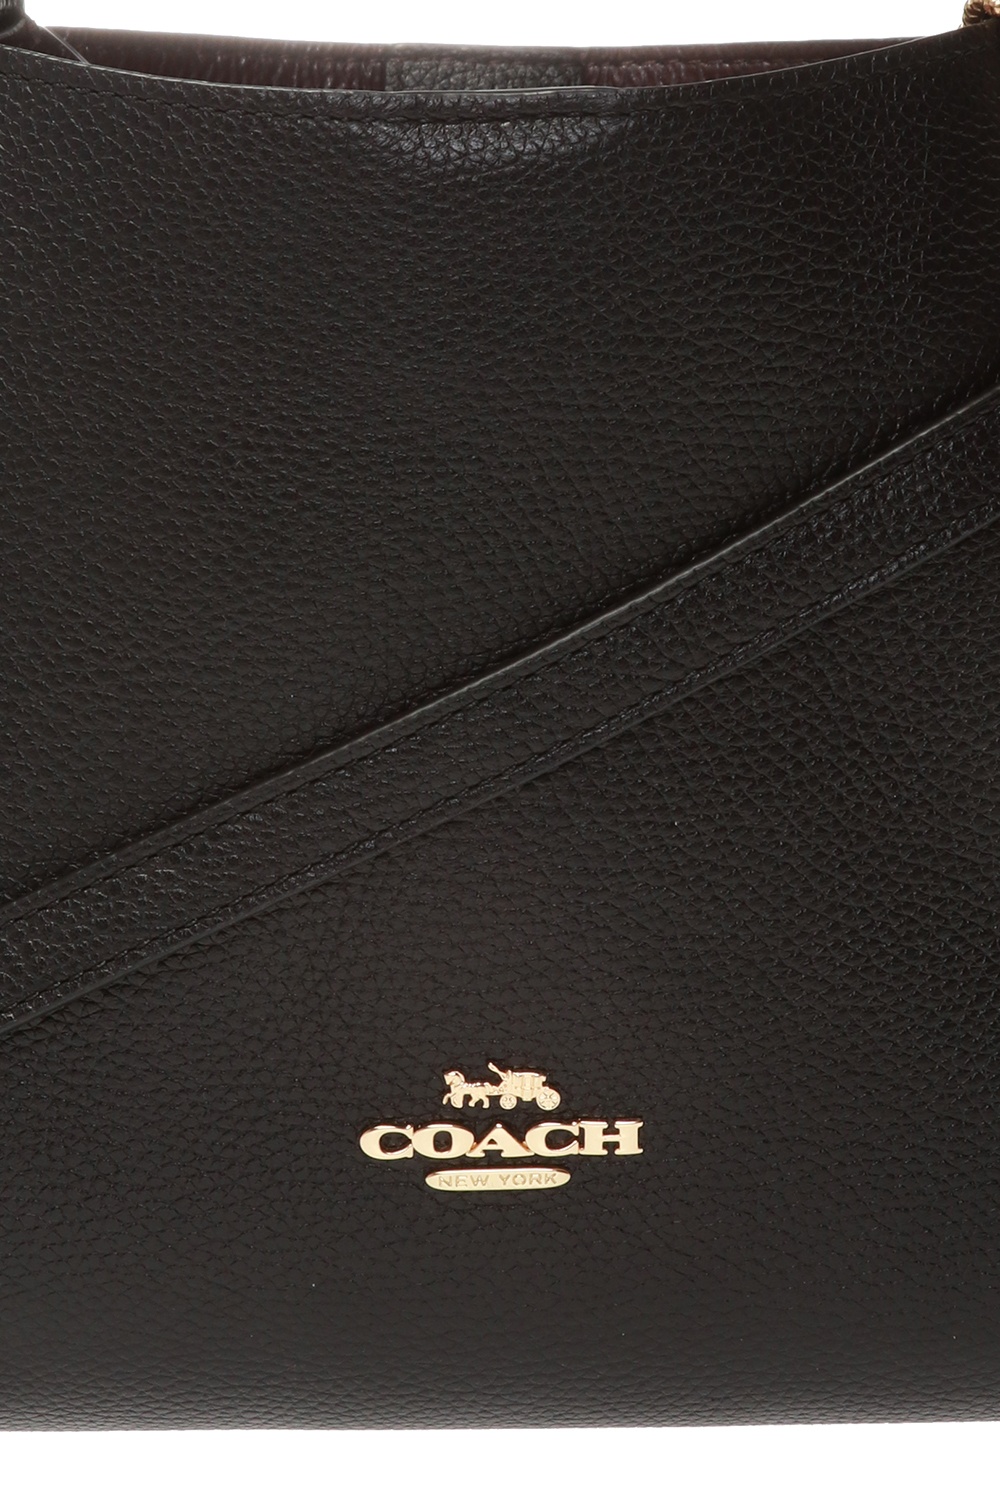 Coach Hadley 21 Pebble Leather Hobo, Hobo Bags, Clothing & Accessories